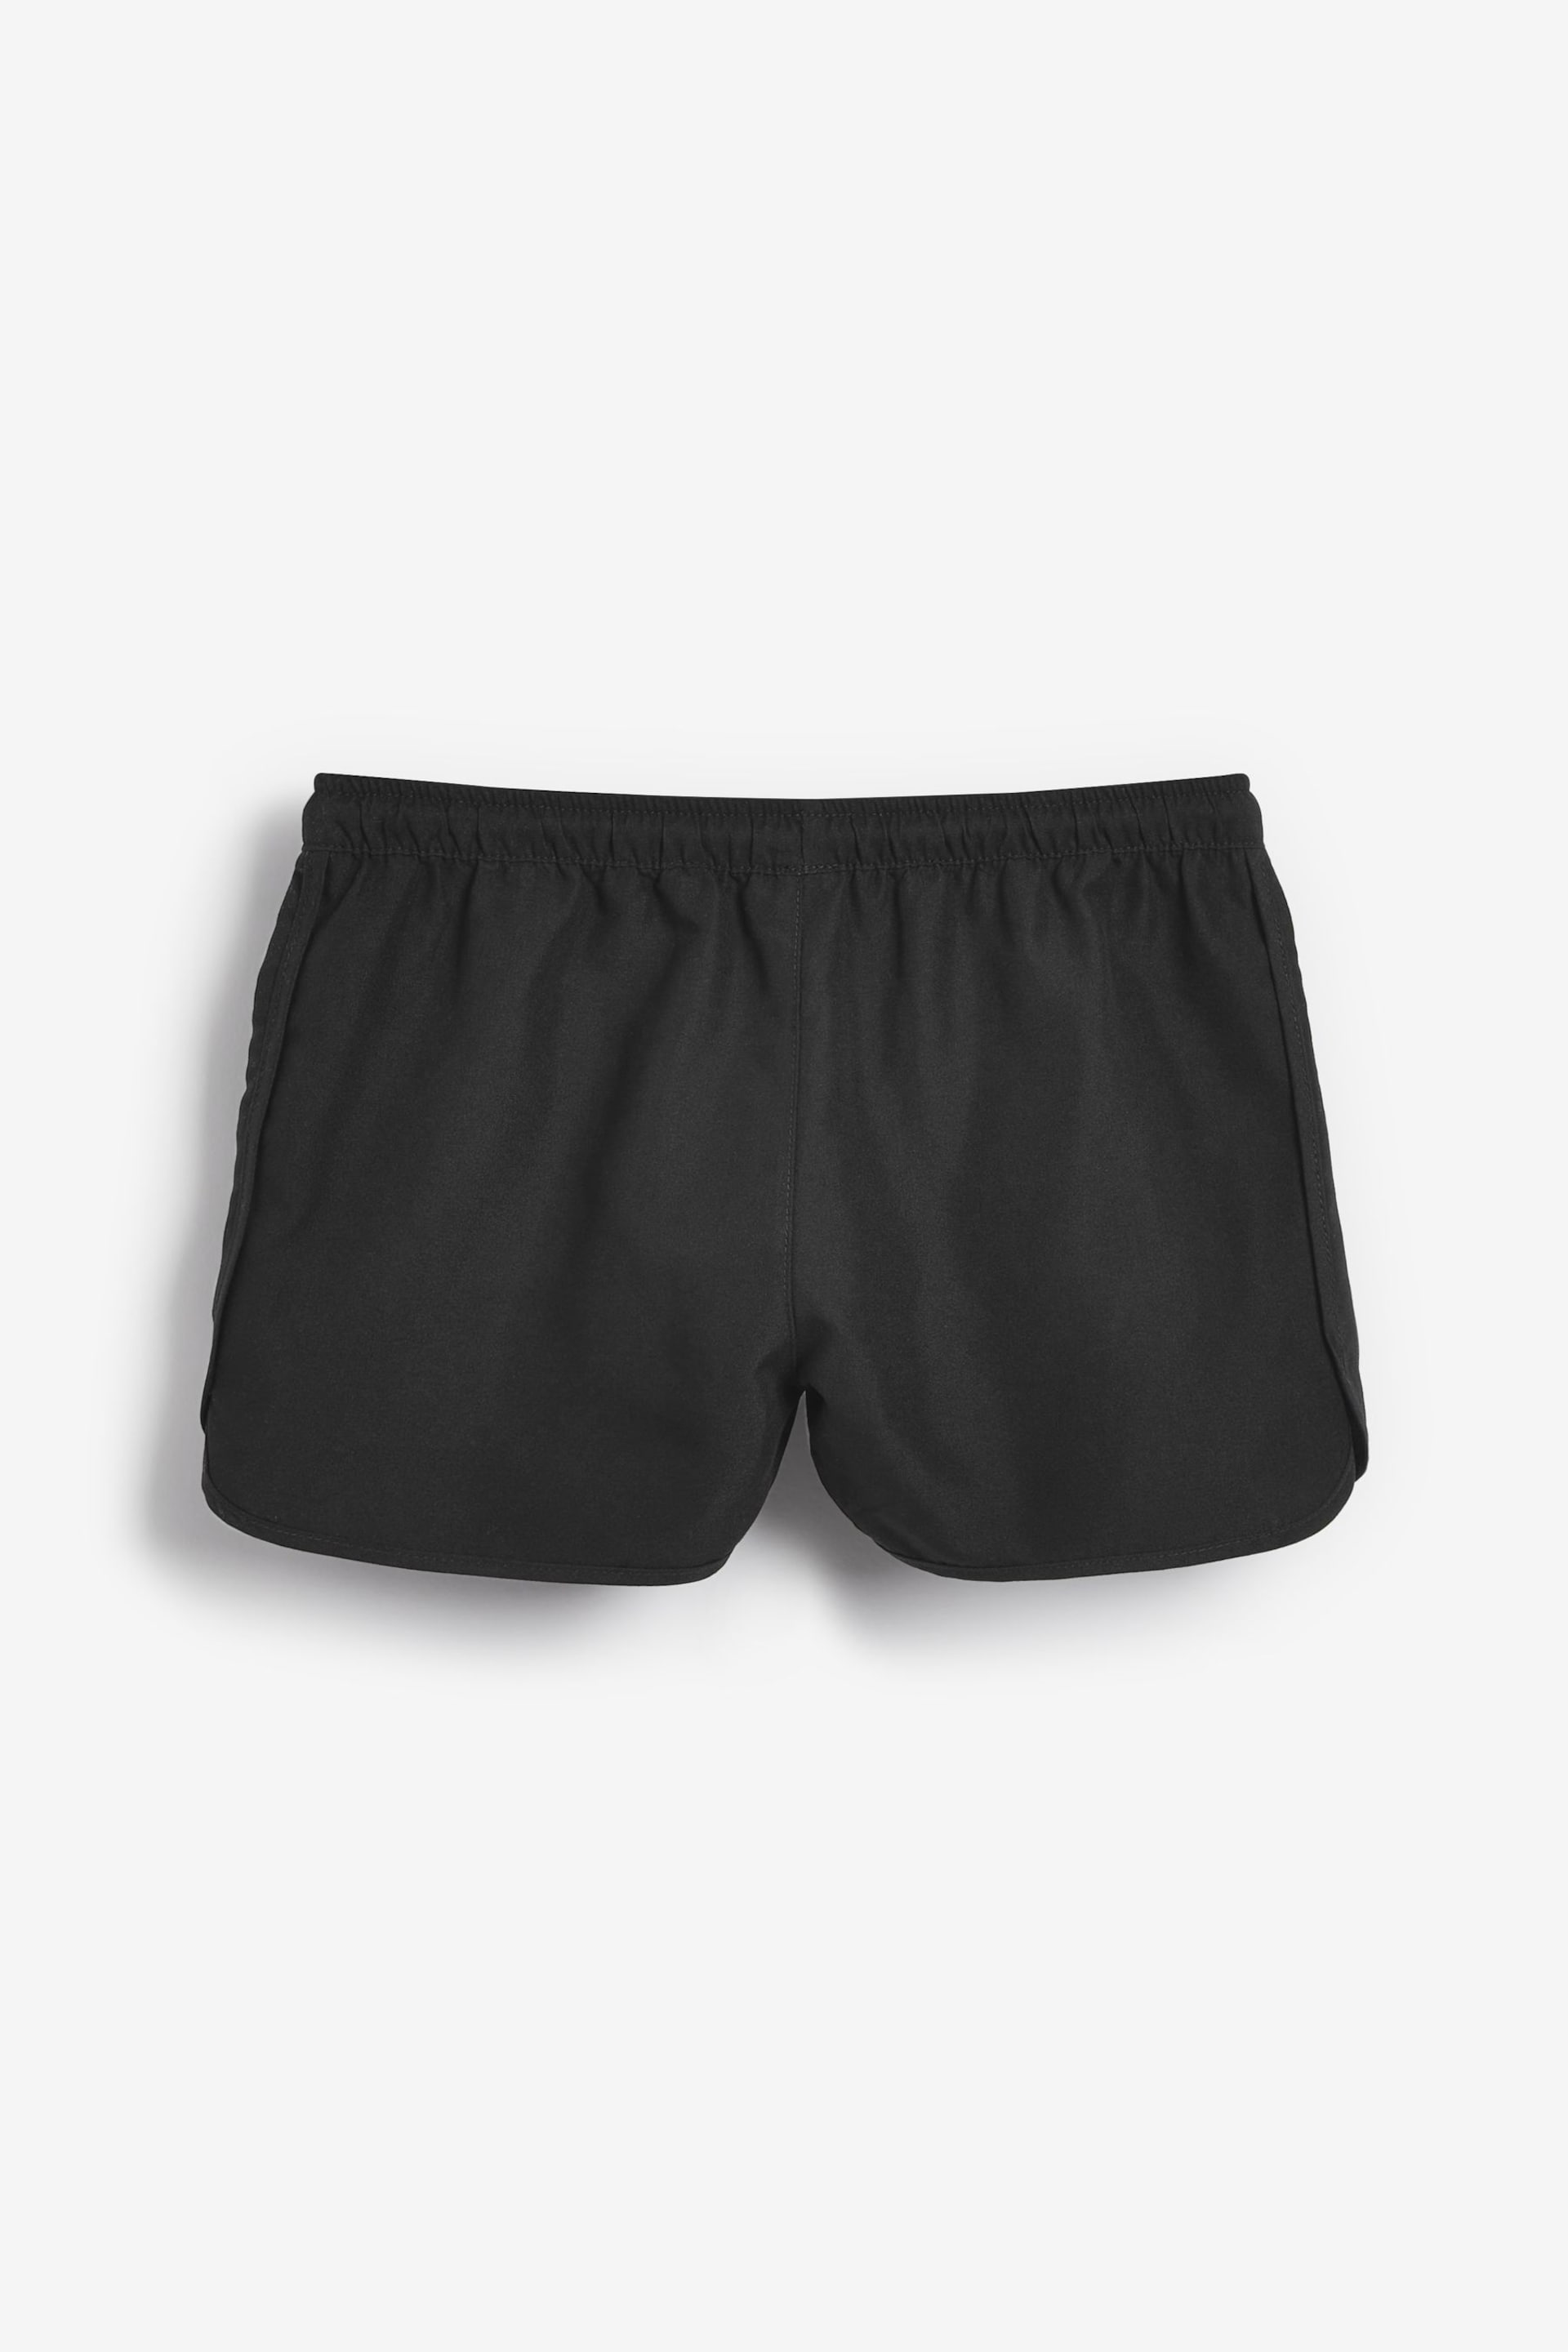 Black Quick Dry Beach Shorts - Image 4 of 5